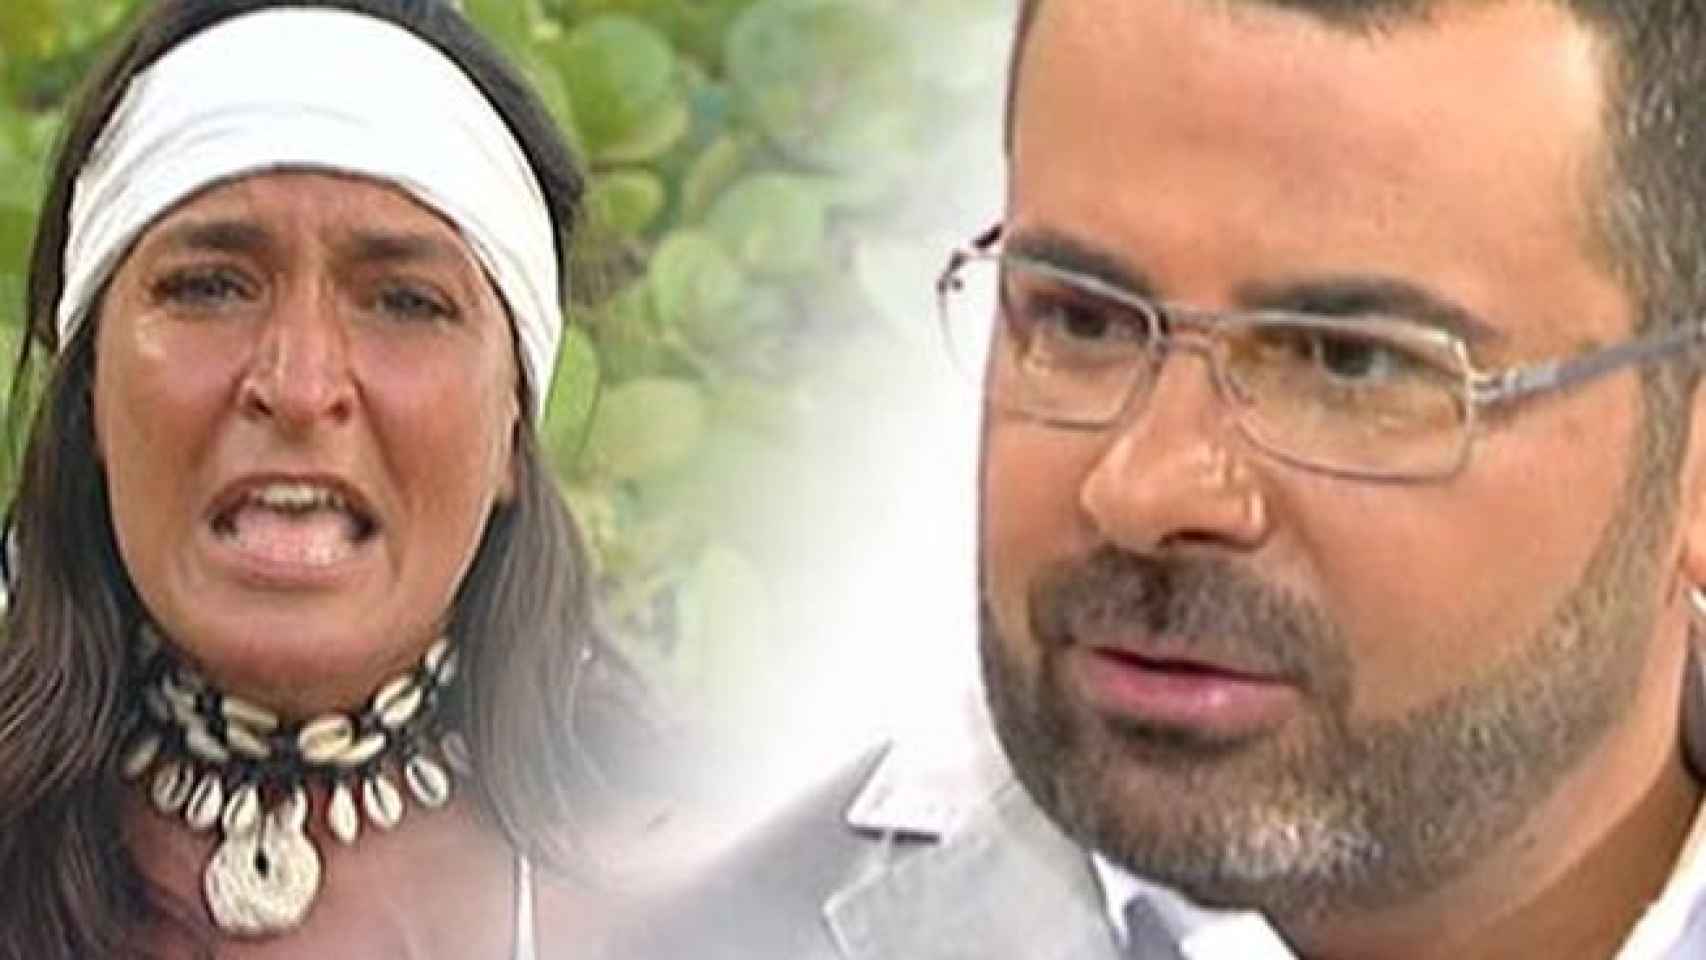 Maldita hemeroteca: el día que Jorge Javier llamó 'hija de puta' a Aída Nízar